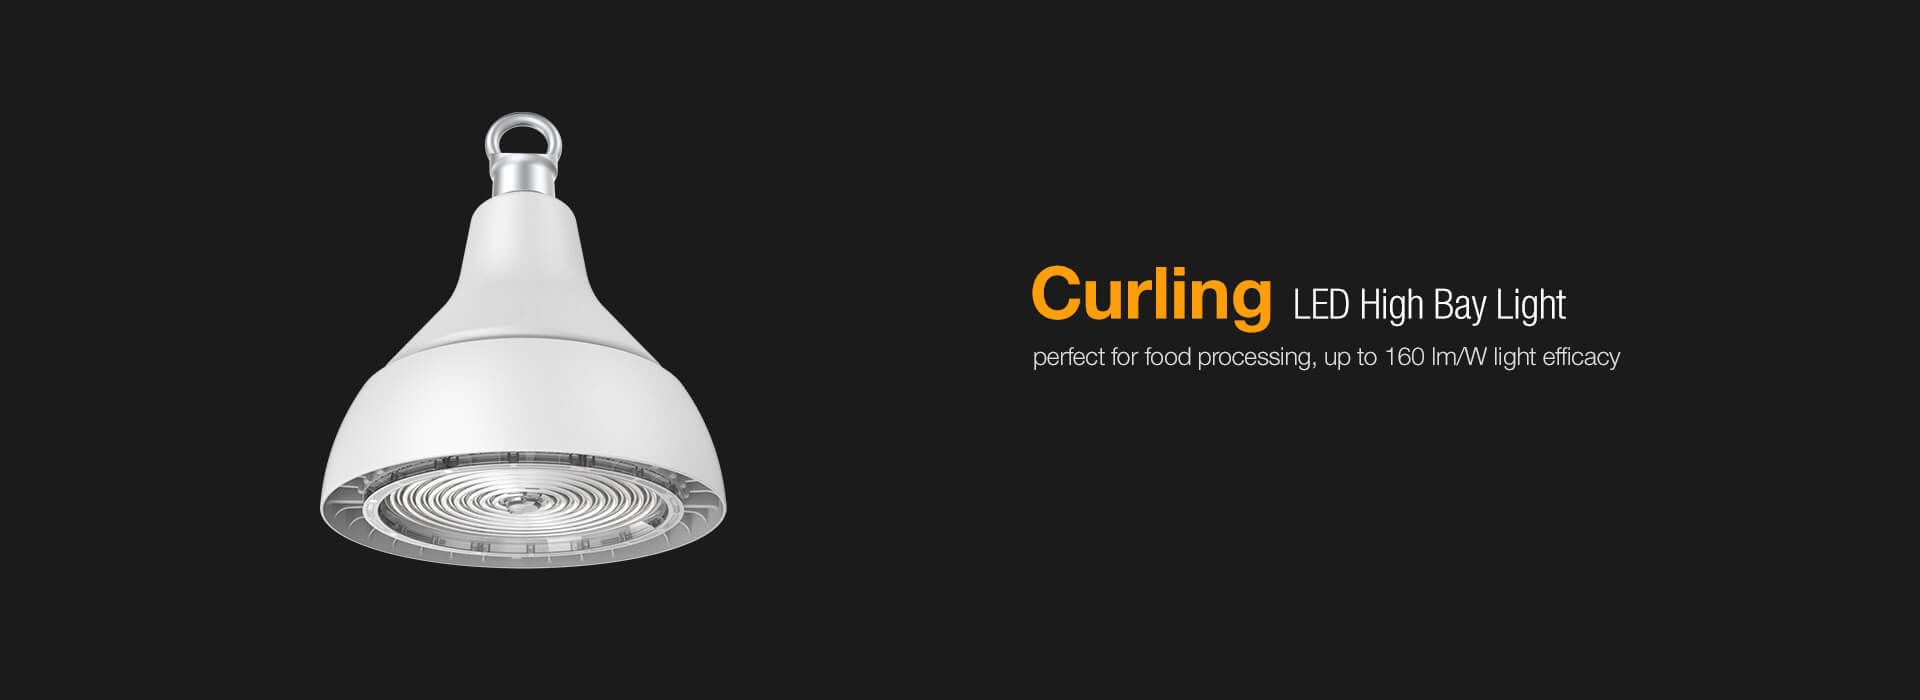 Curling LED High Bay Light